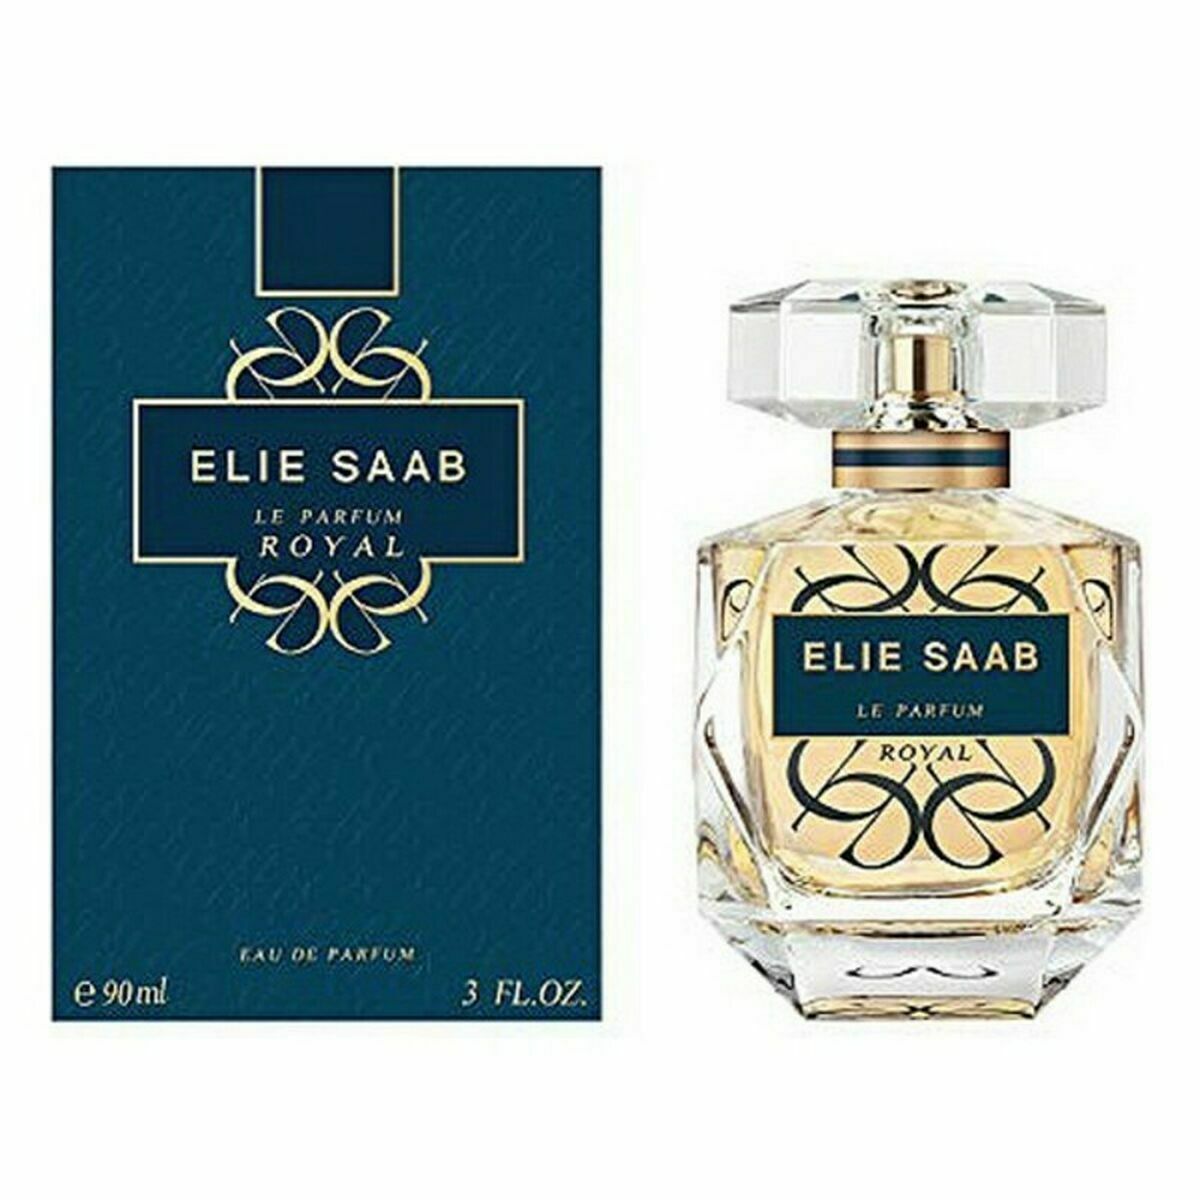 Kaufe Le Parfum Royal Elie Saab EDP - Damen bei AWK Flagship um € 85.00